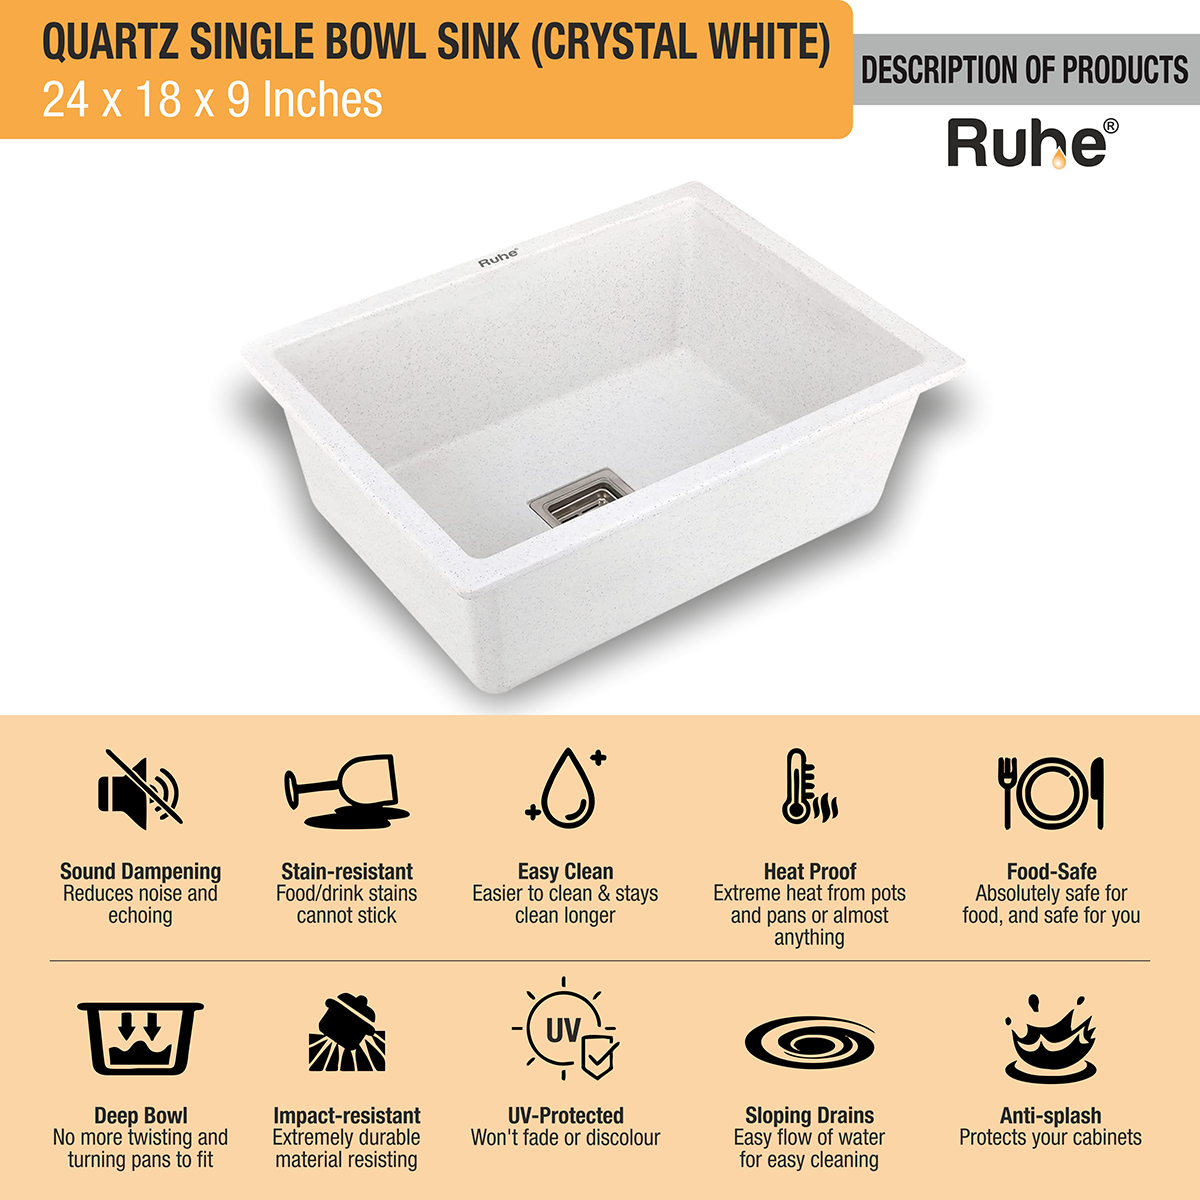 Quartz Single Bowl Crystal White Kitchen Sink (24 x 18 x 9 inches) description of products